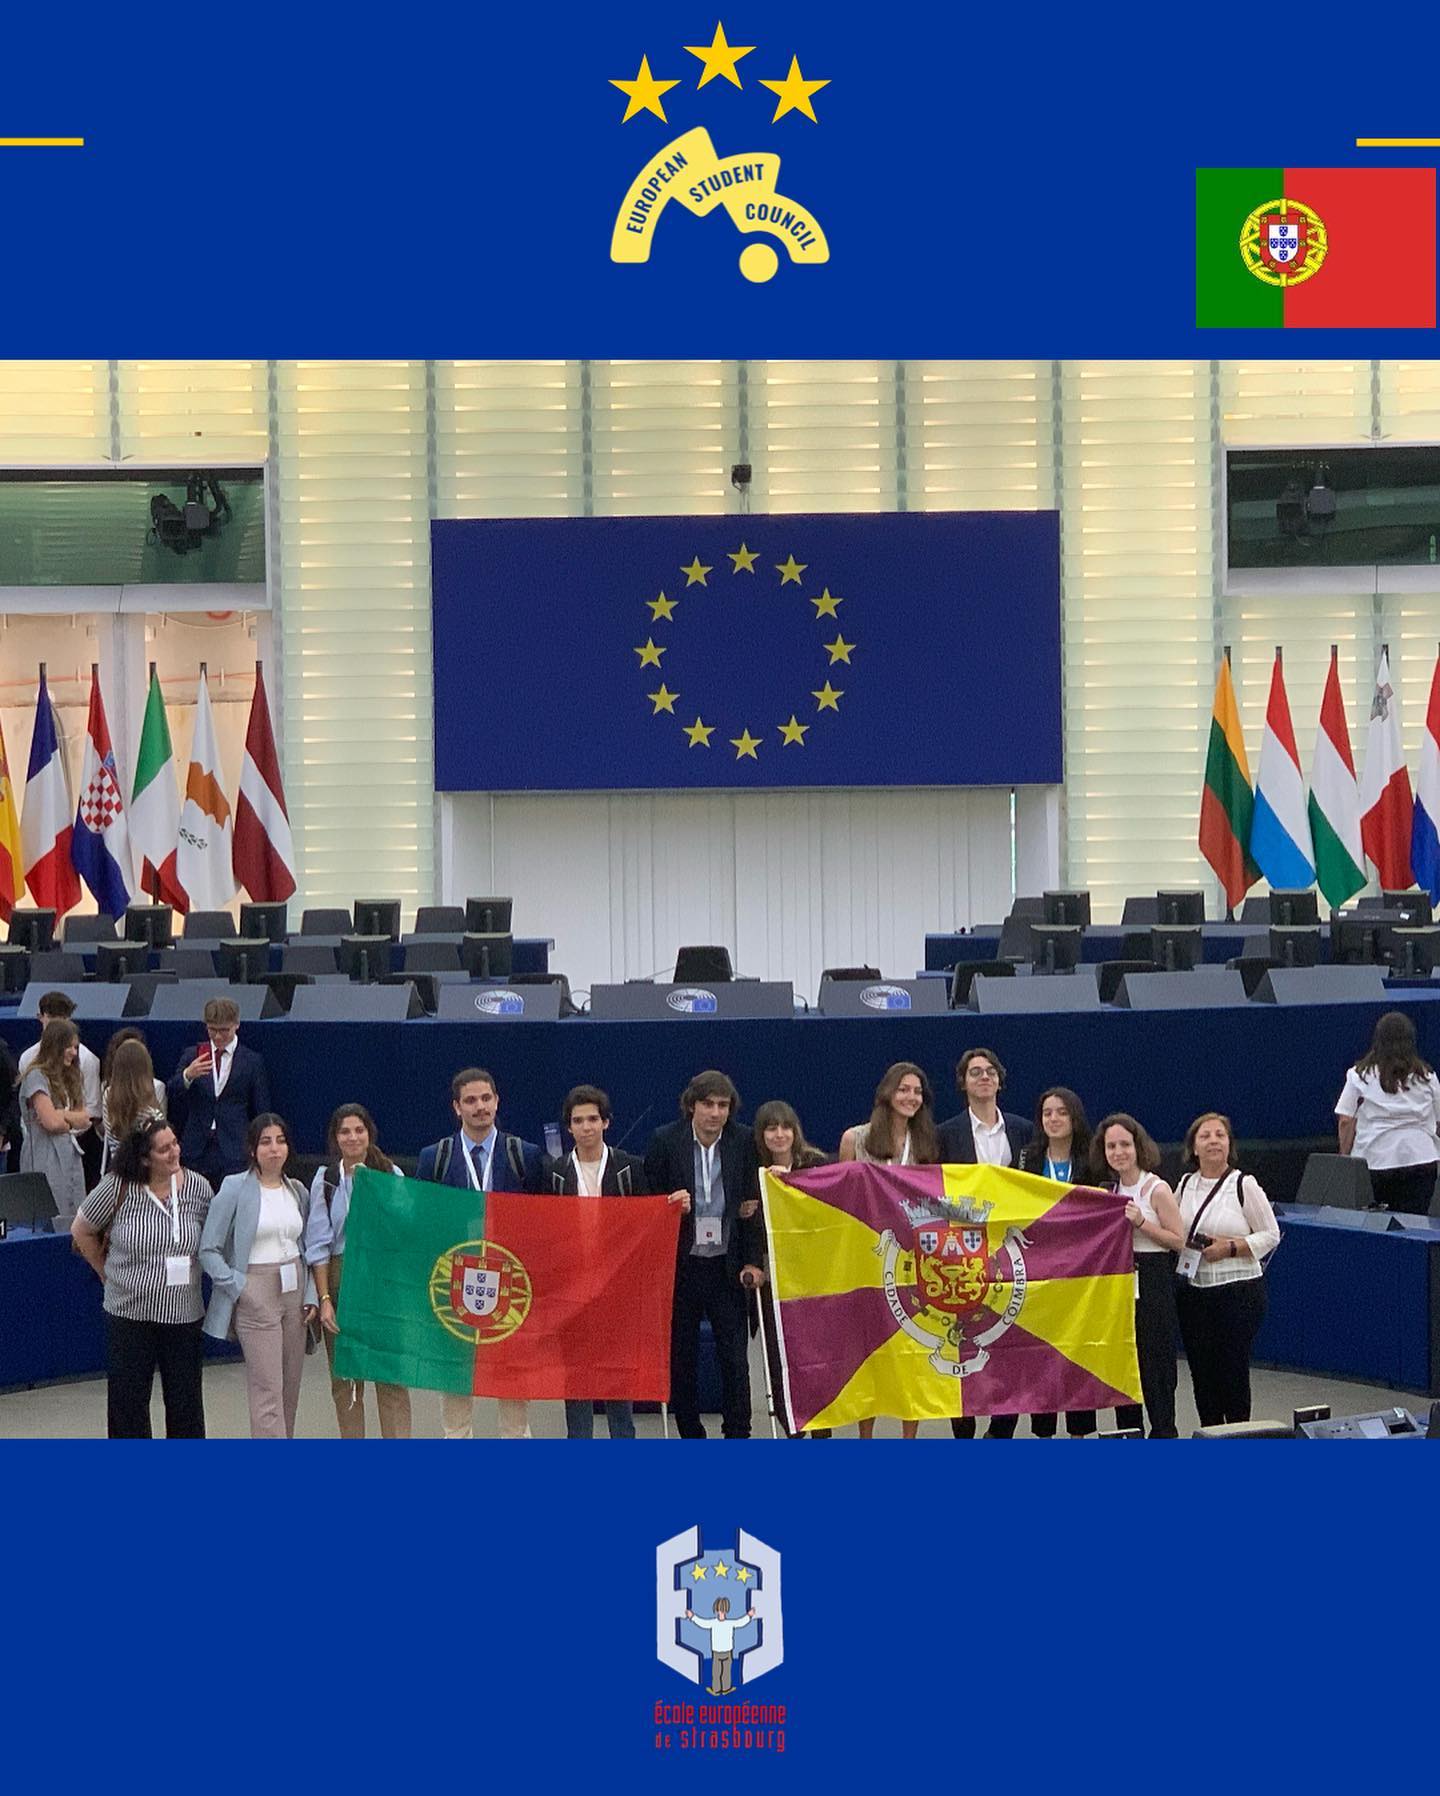 Comitiva da EBSQF no Parlamento Europeu